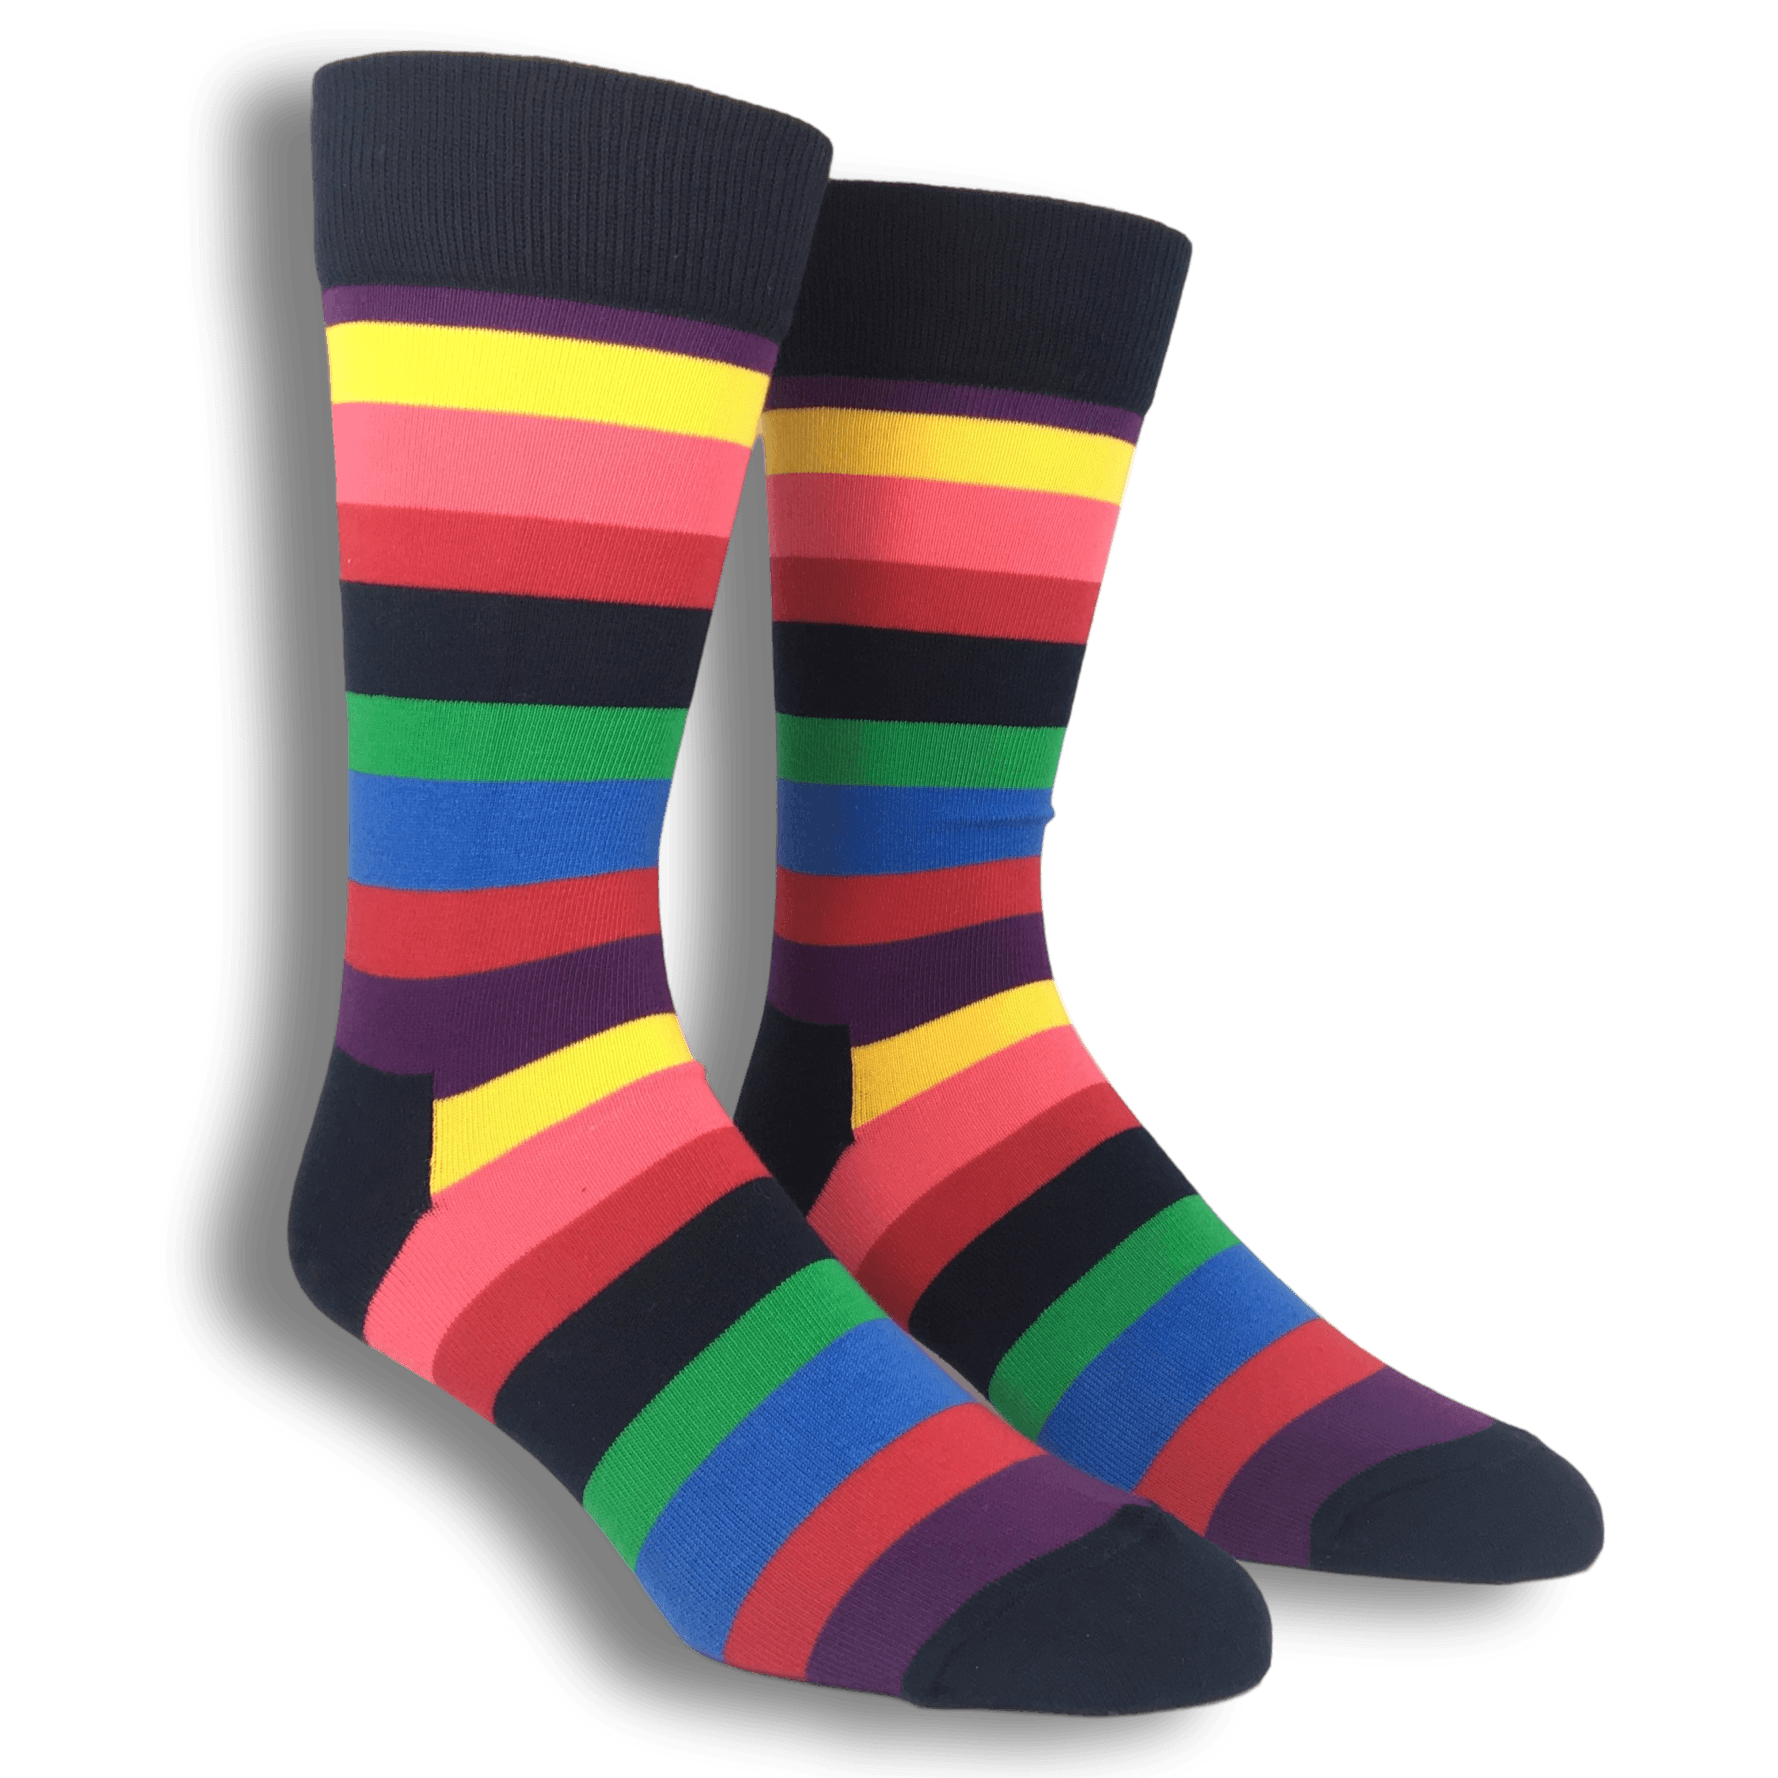 Multi Colored Stripe Socks By Happy Socks